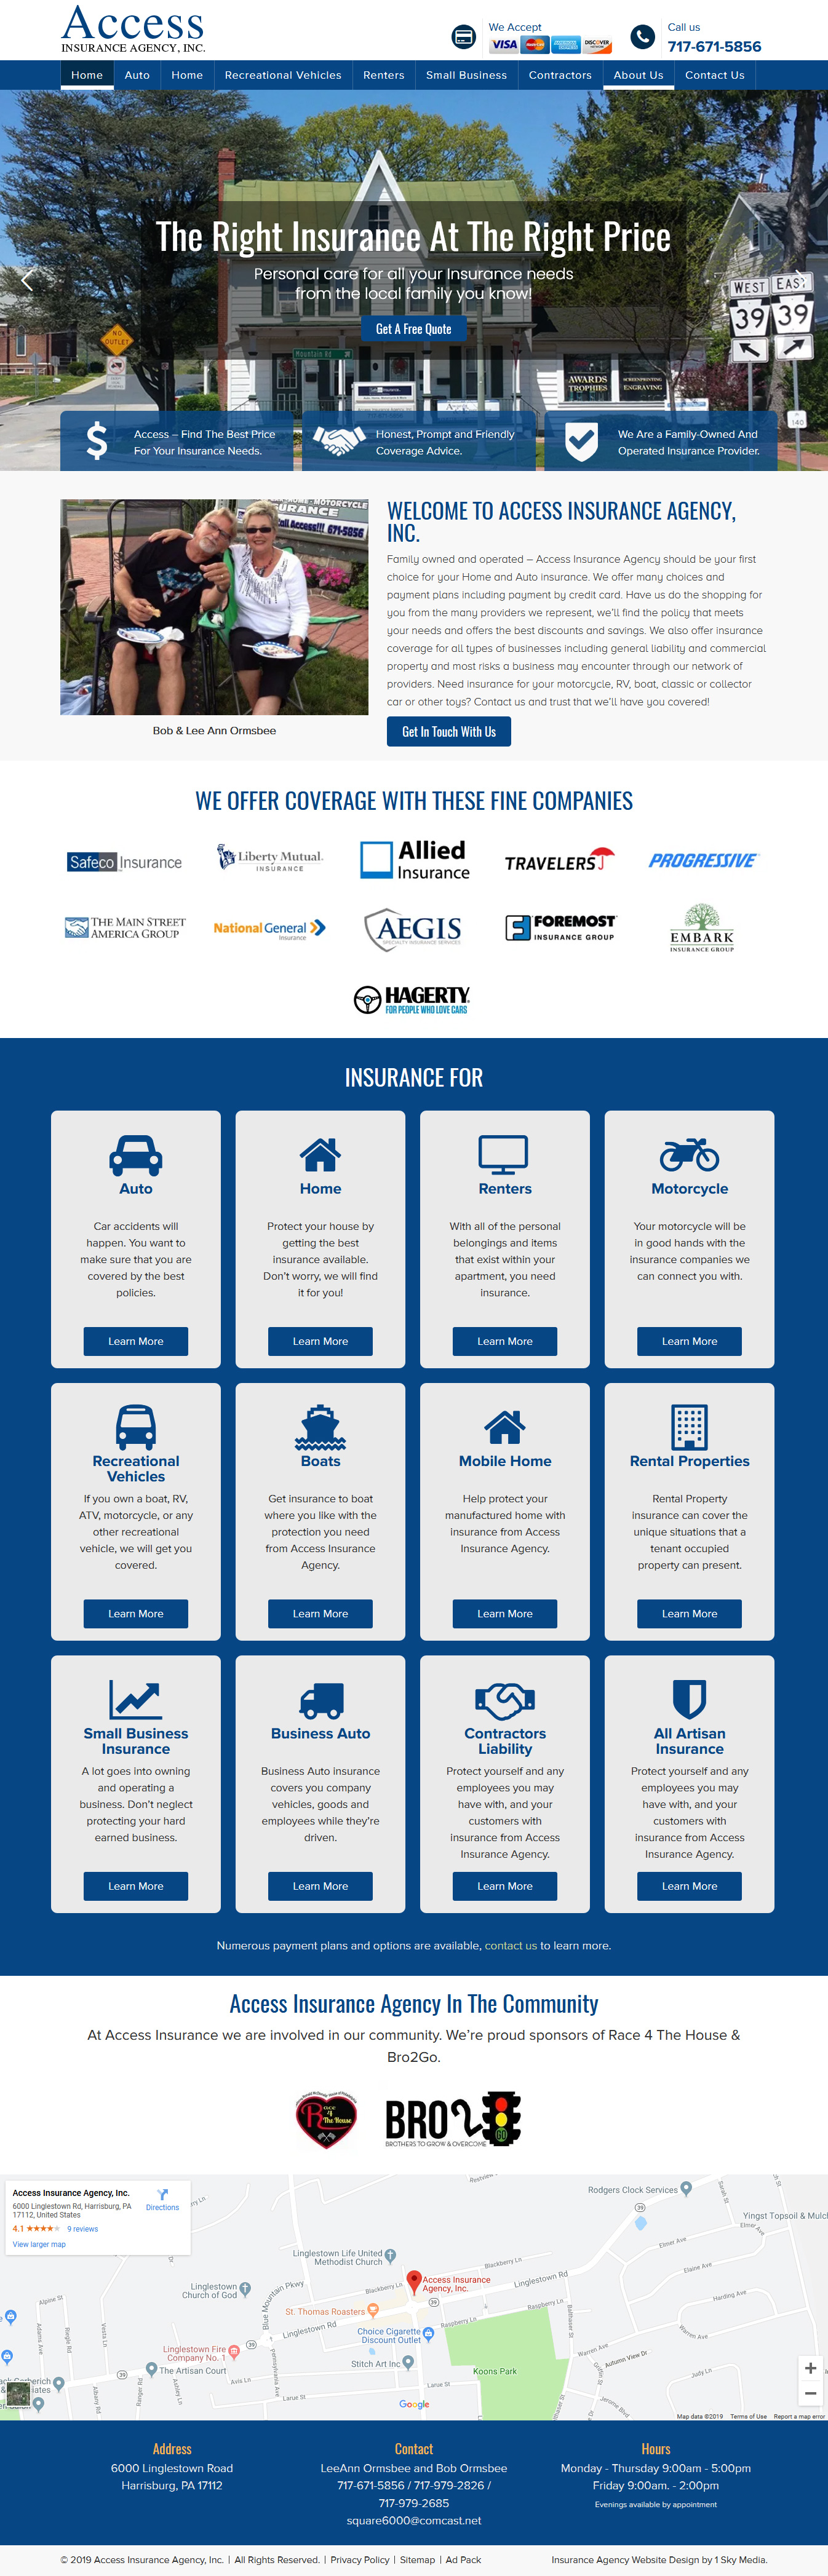 Access Insurance - Insurance company website design